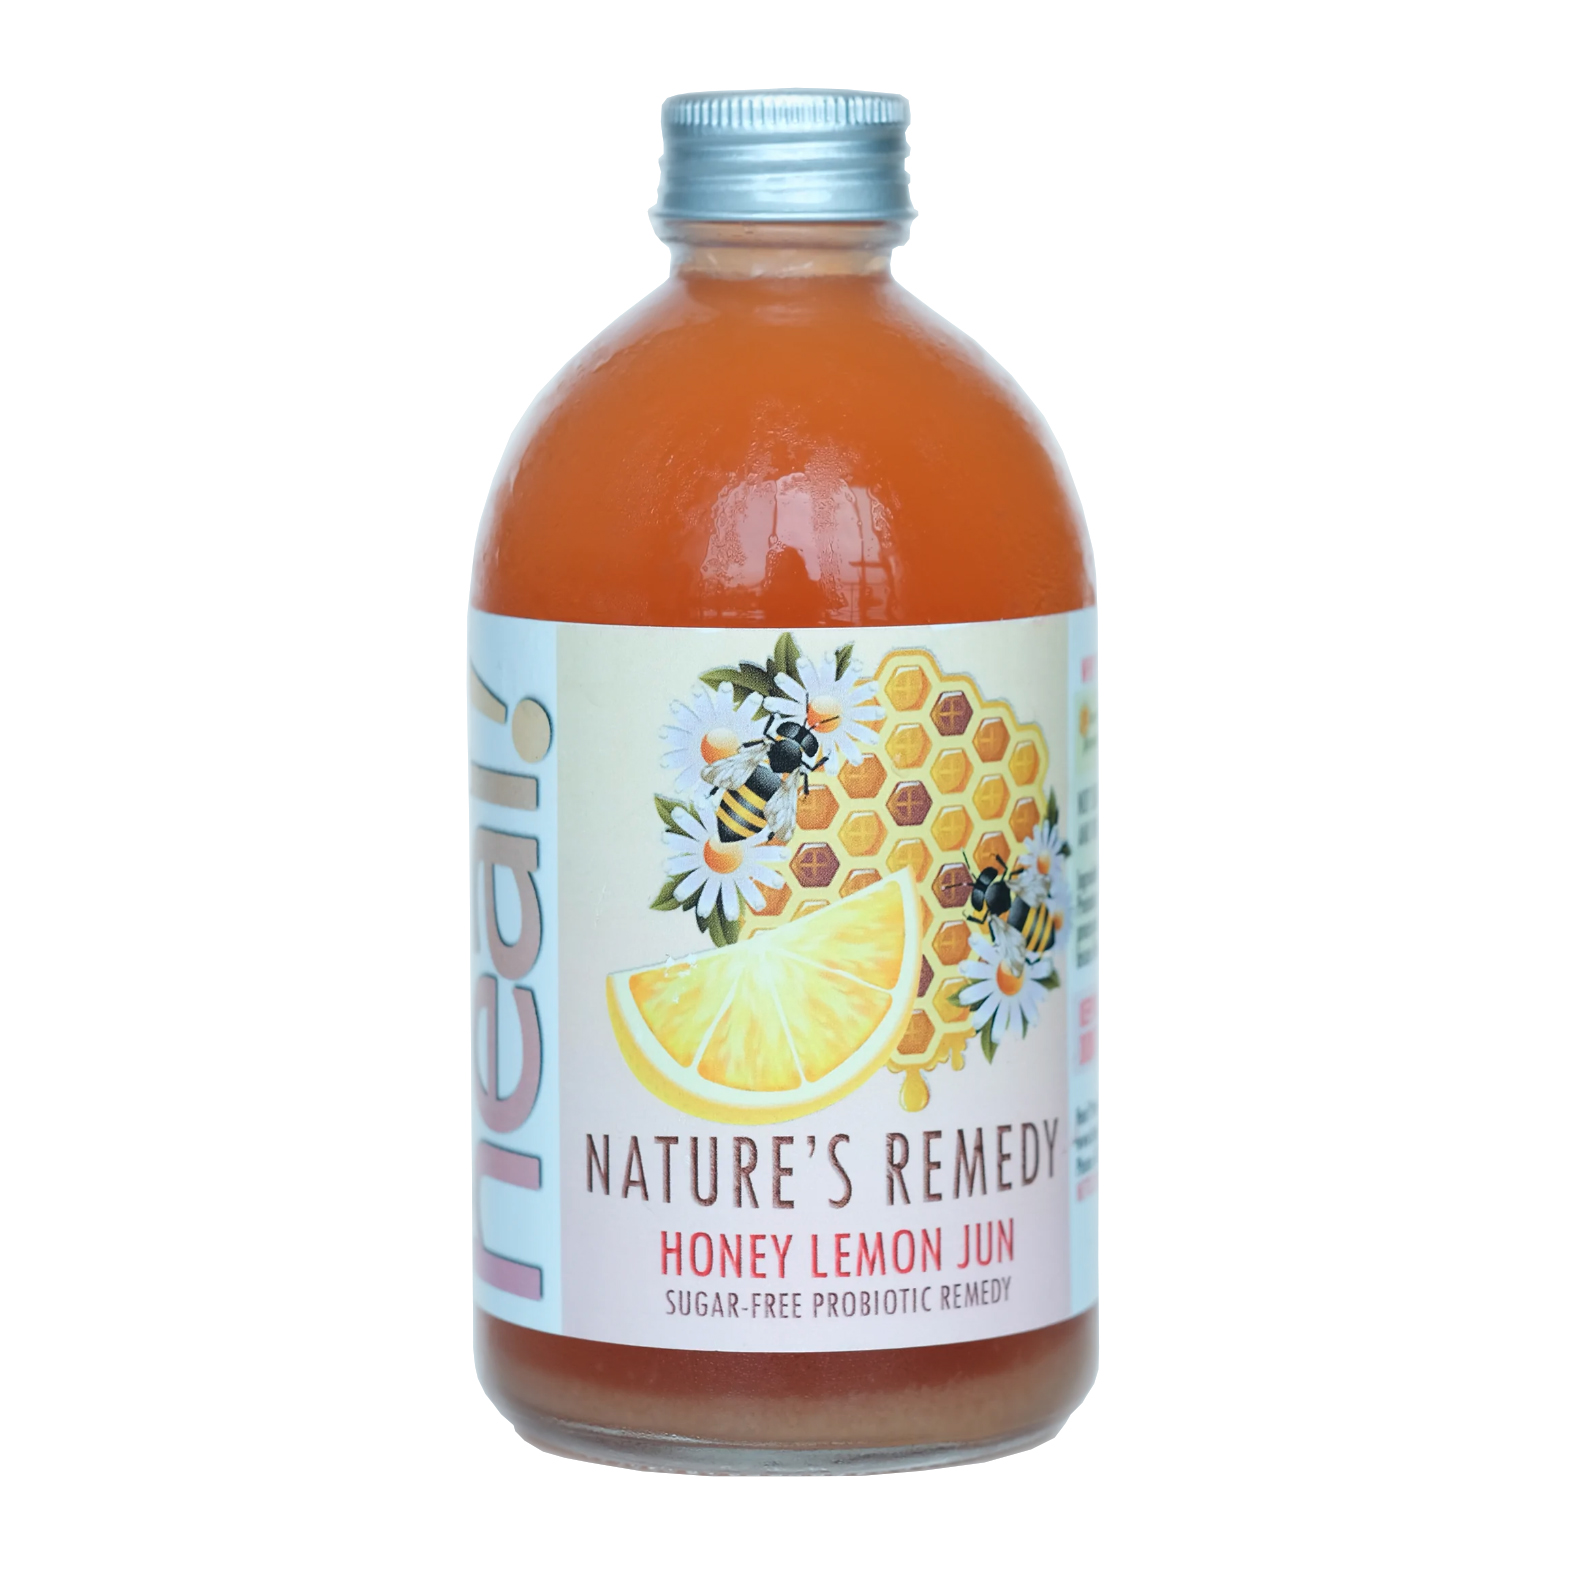 Nature's Remedy Honey Lemon Jun by Heal! Probiotics